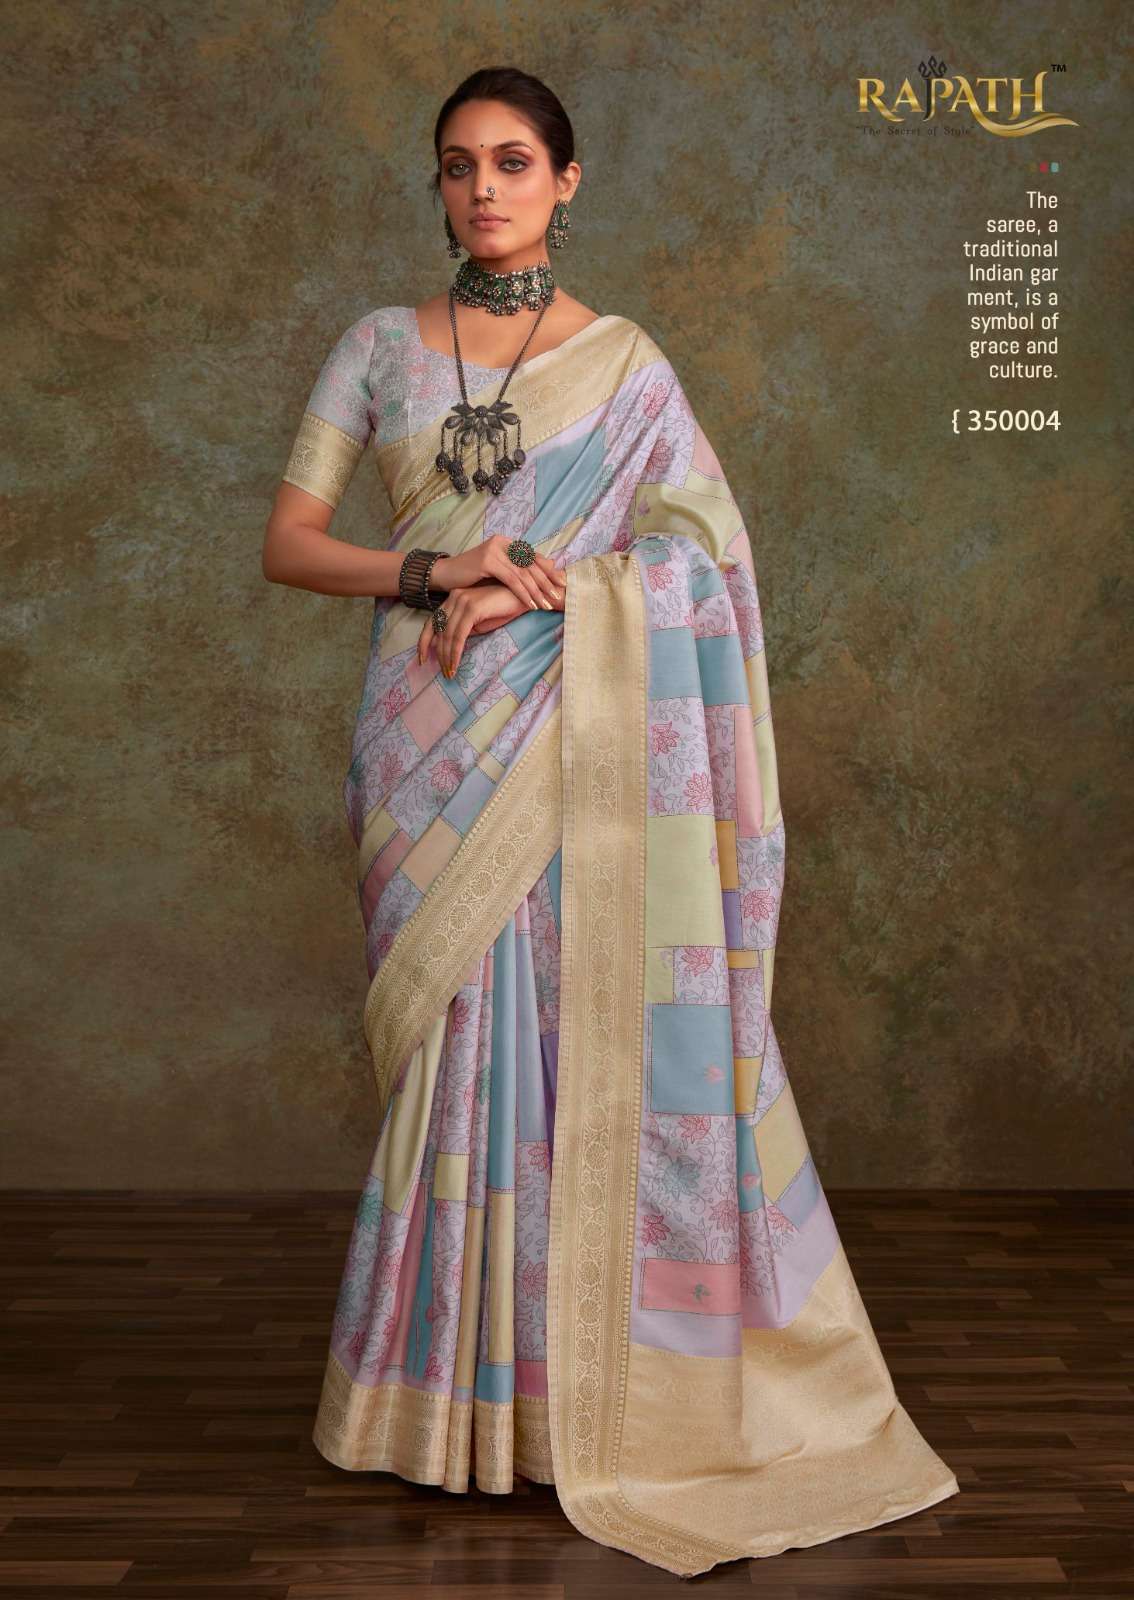 Rajpath Shrinika Edition series 350001-350006 Soft Silk saree